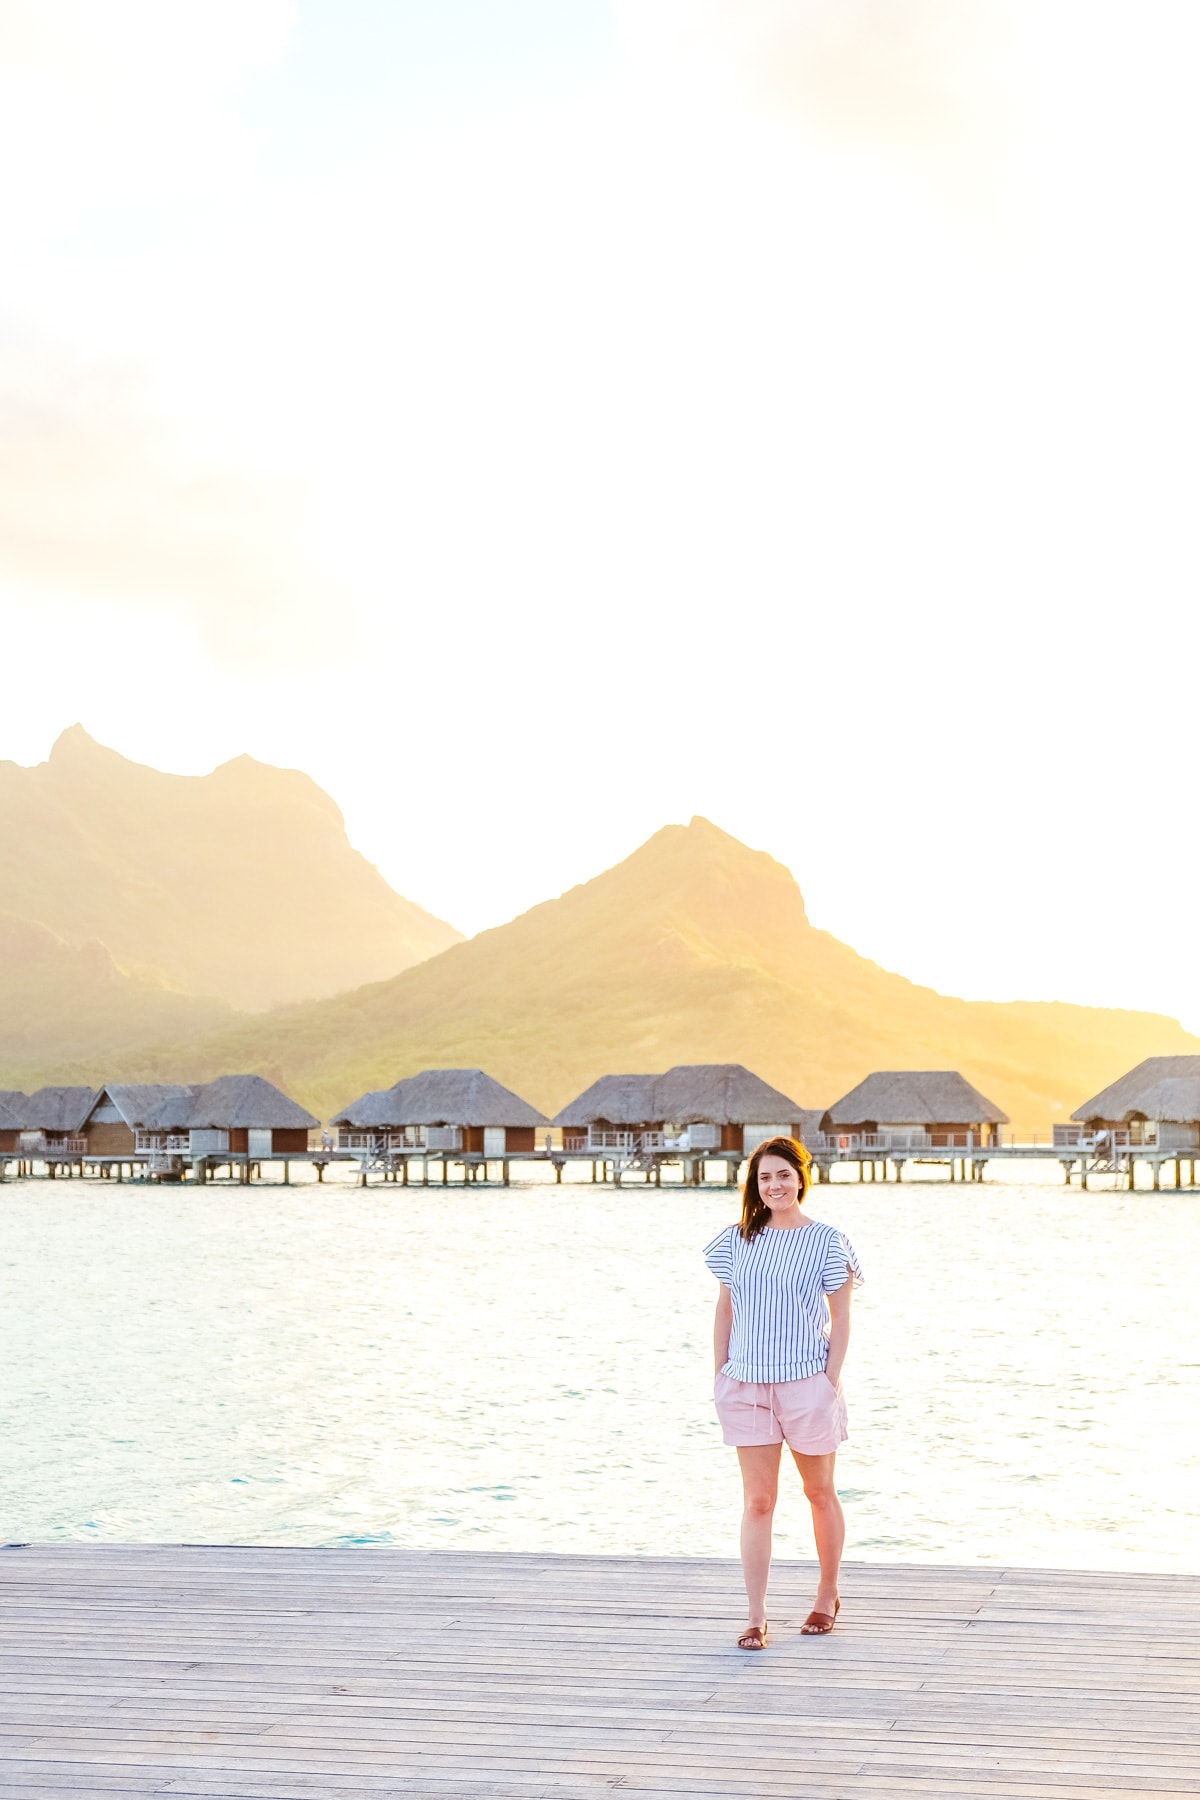 Our Honeymoon Part 2: Bora Bora, French Polynesia by top Houston lifestyle blogger Ashley Rose of Sugar and Cloth